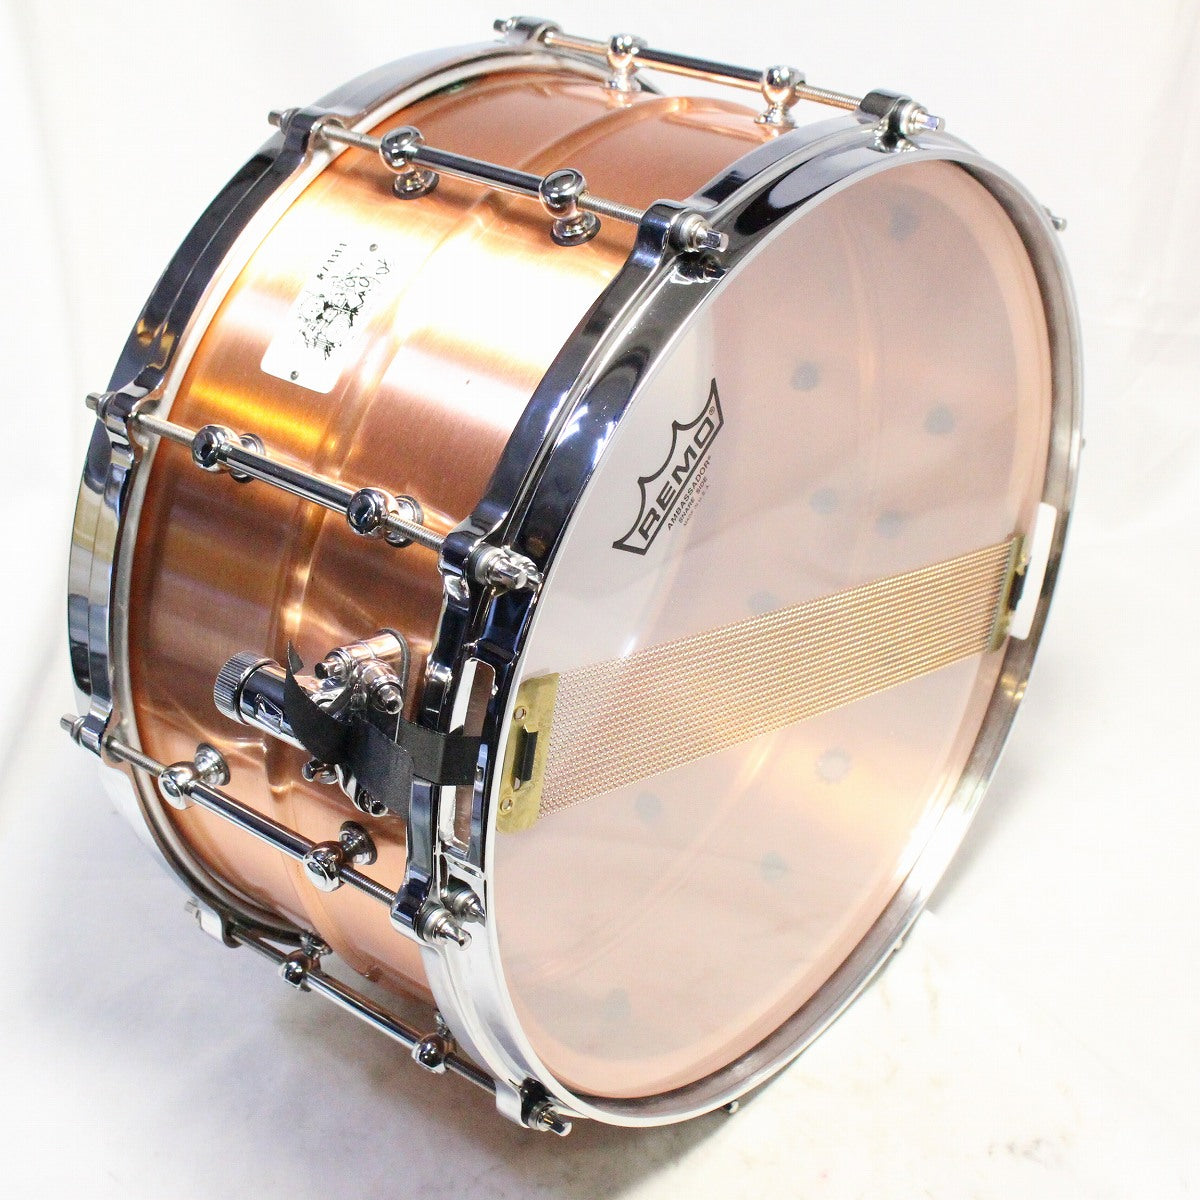 USED TAMA / HS147B Mr.Childern Hideya Suzuki model 14x7 TAMA snare drum [08]